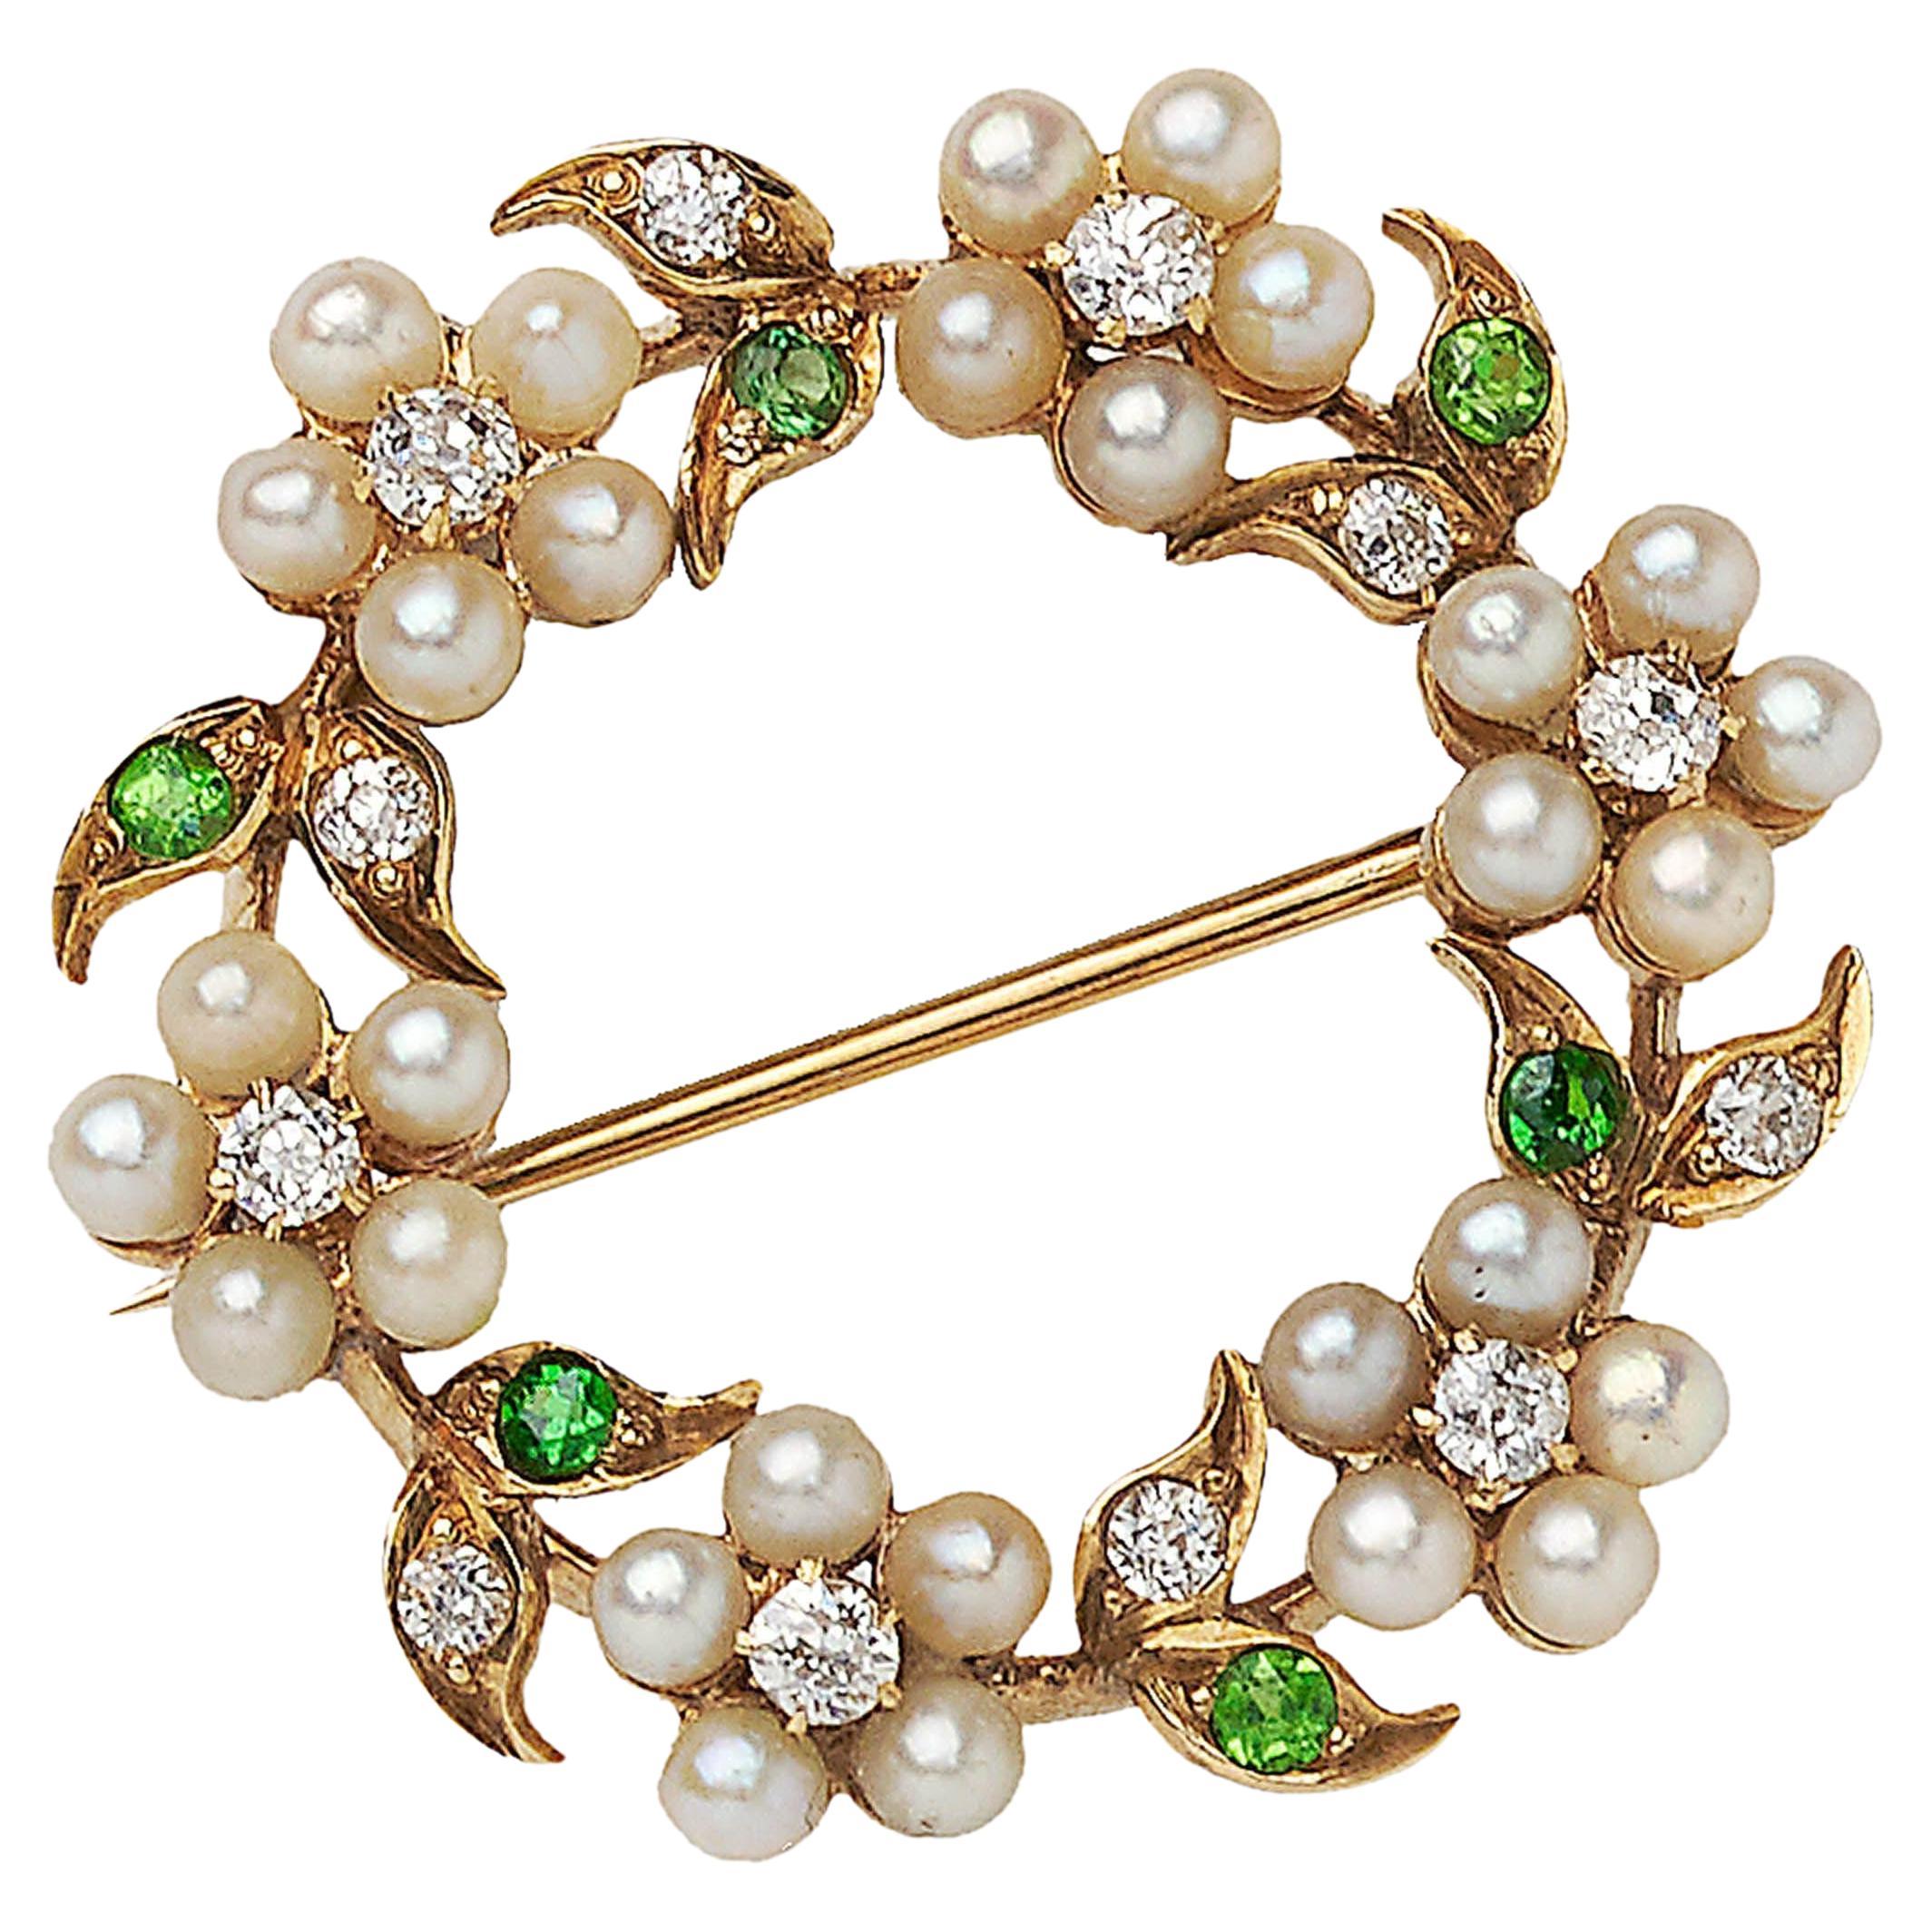 Antique Pearl, Diamond, Demantoid Garnet and Gold Wreath Brooch, circa 1920